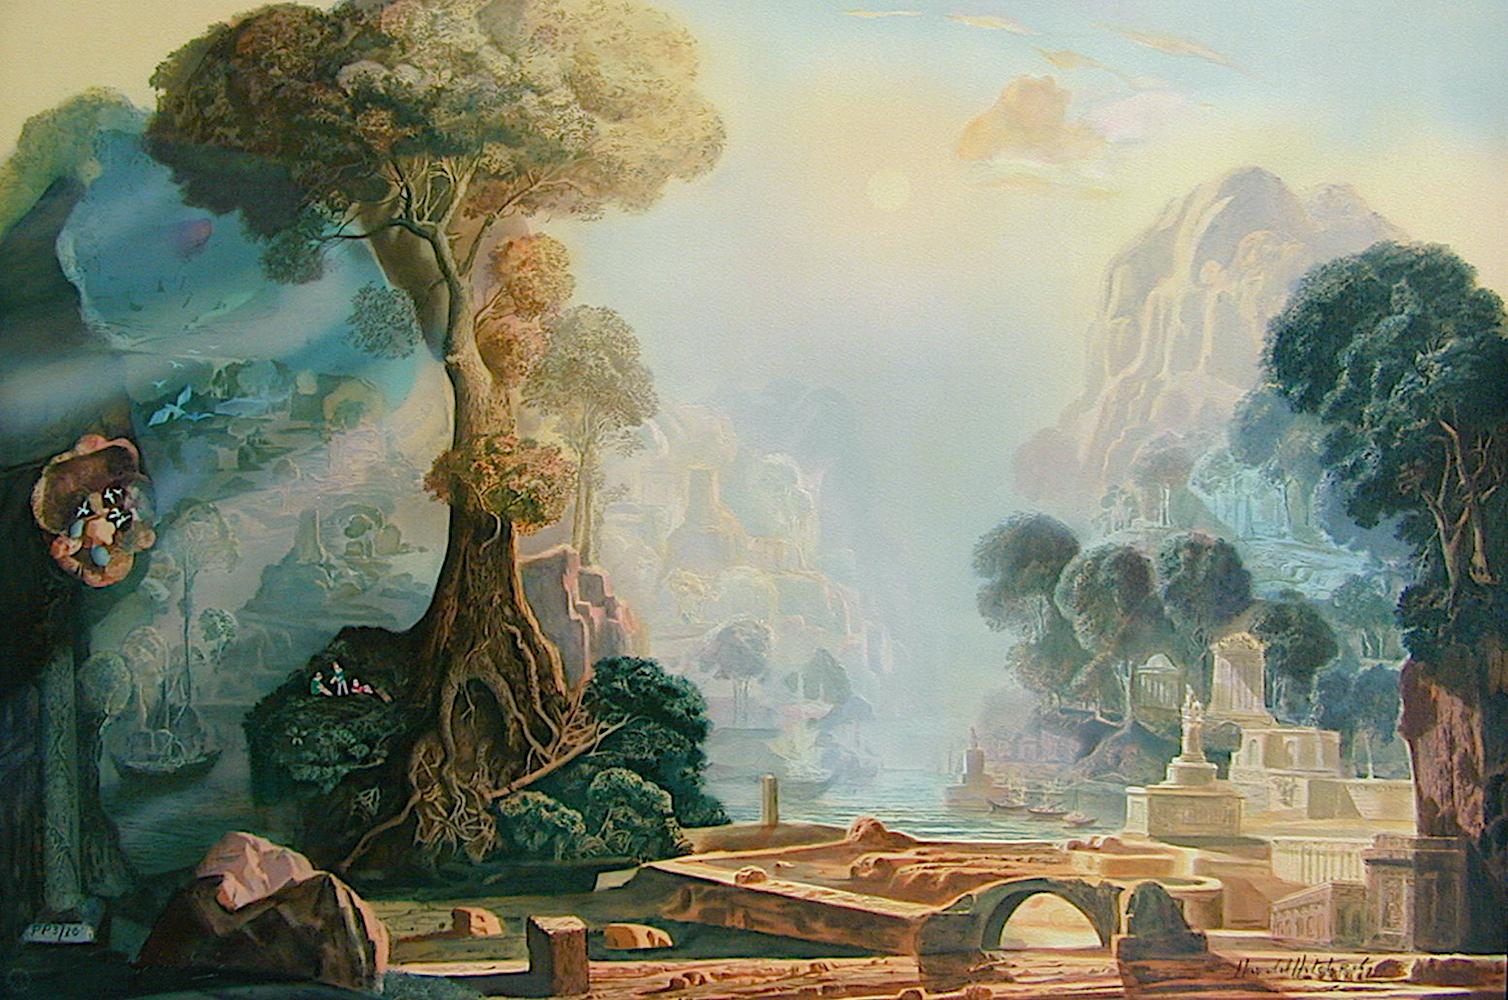 PLAINS OF JUPITER Signed Lithograph, Visionary Fantasy Landscape, Romanticism 1